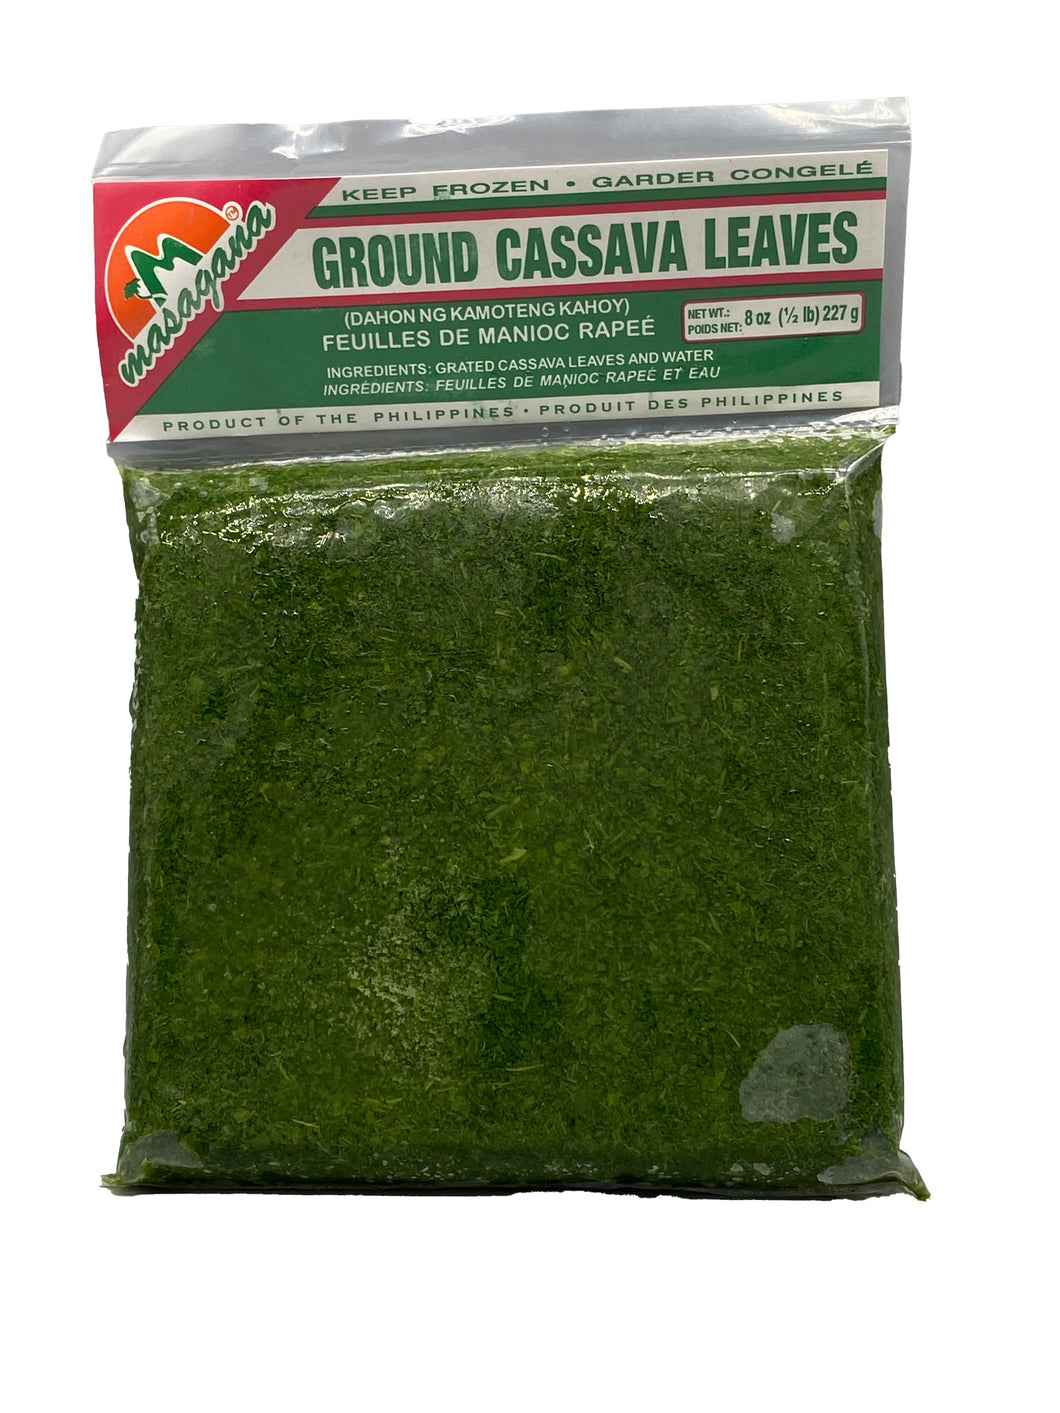 Masagana Ground Cassava Leaves